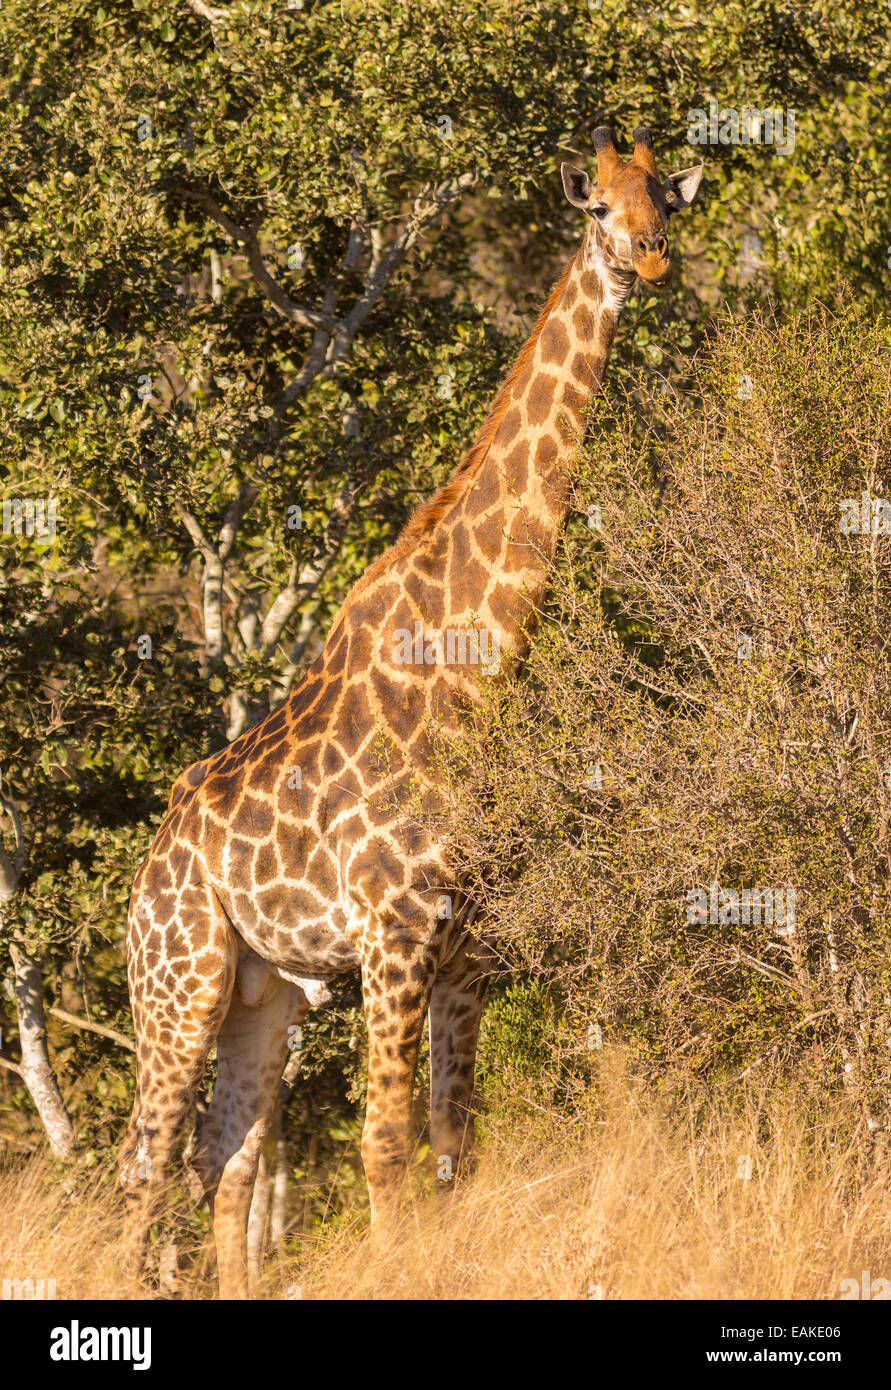 Krüger-Nationalpark, Südafrika - Giraffe im Busch. Stockfoto